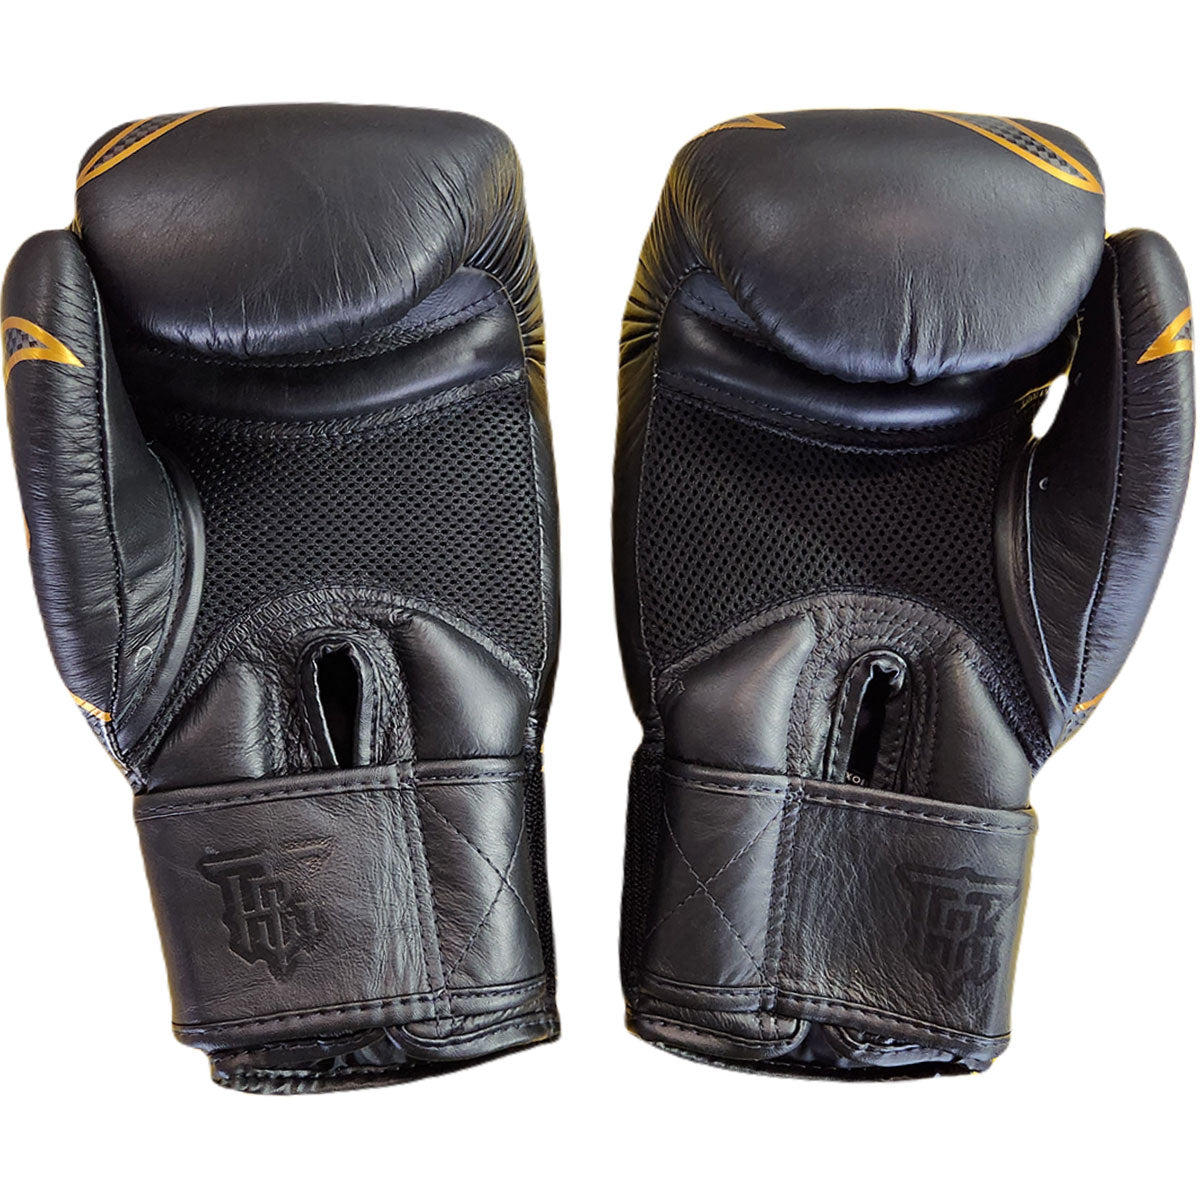 Boxing Gloves Top King TKBGEM-01 Air Black Silver Empower Creativity